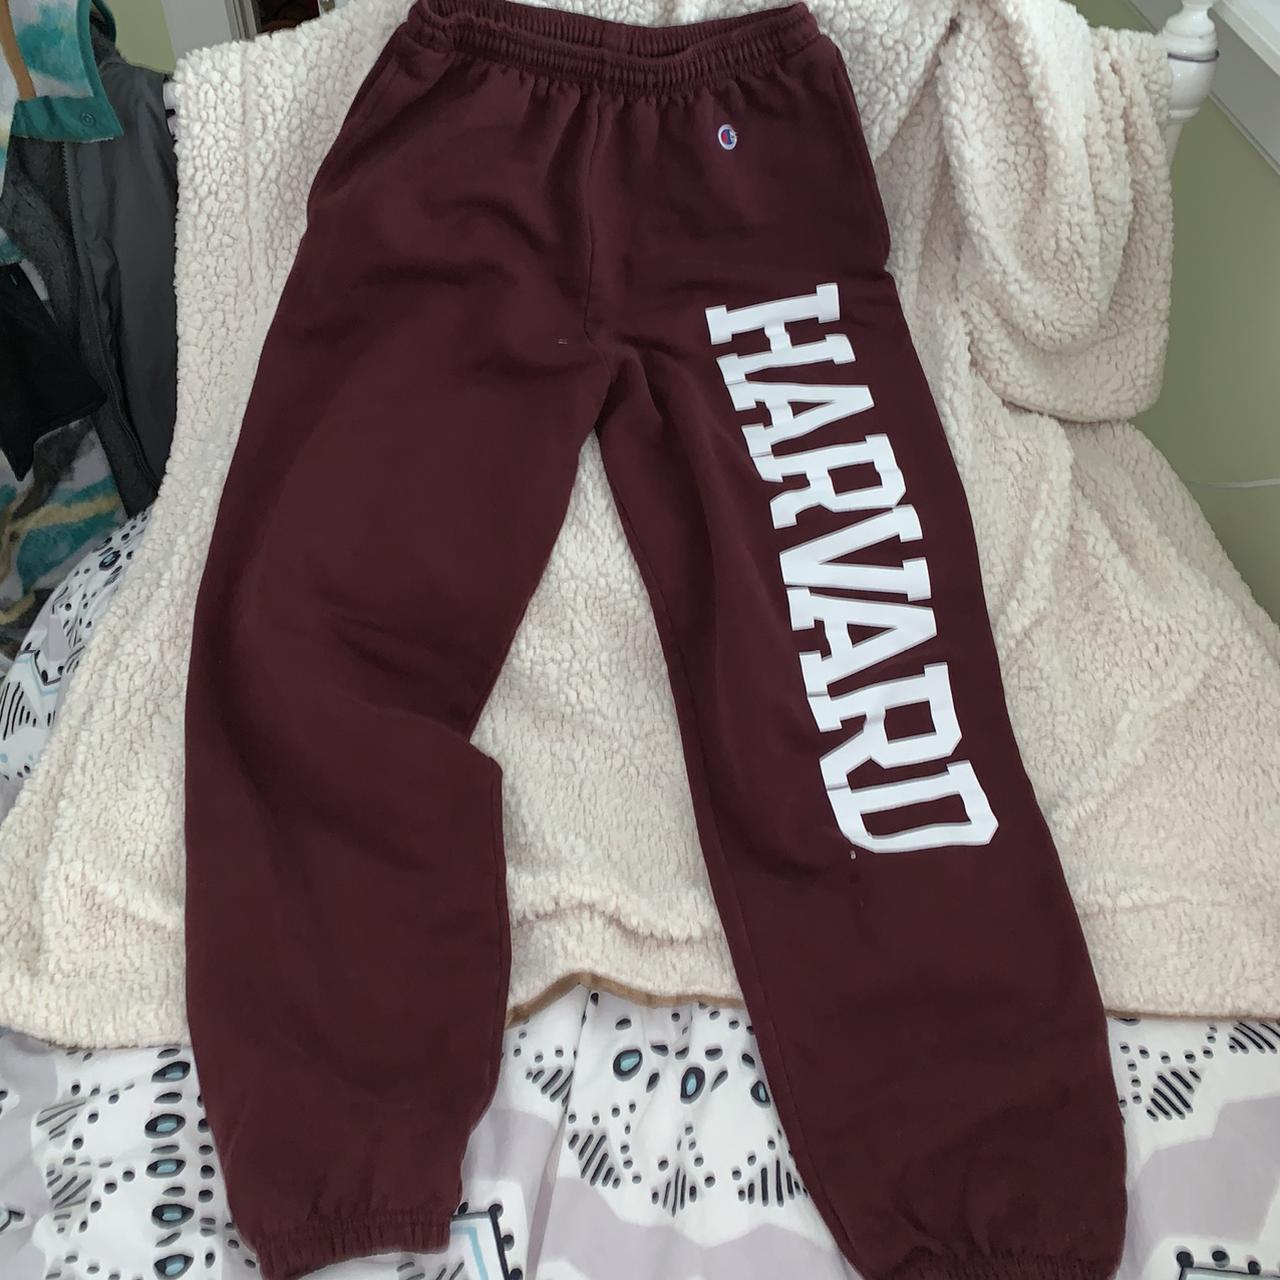 SOLD SOLD SOLD**** Official Harvard sweatpants... - Depop